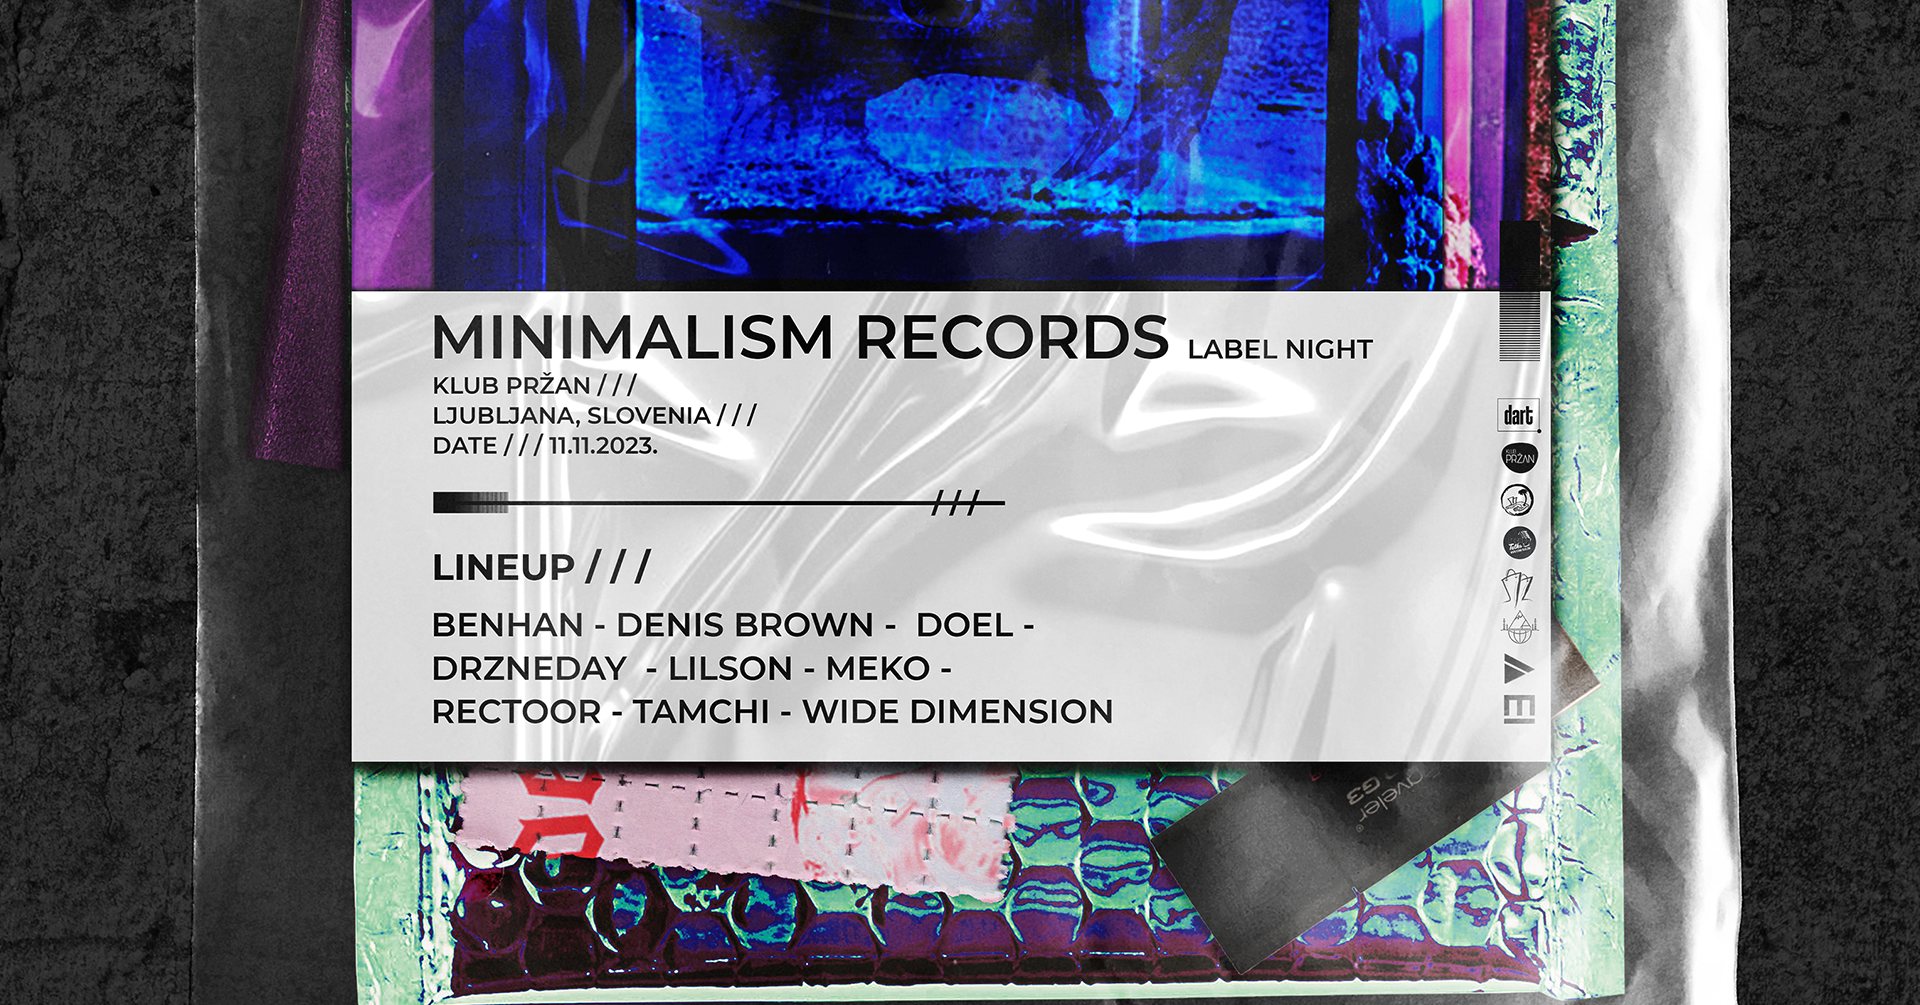 Minimalism Records Label Night at Slovenia / Klub Przan - フライヤー表